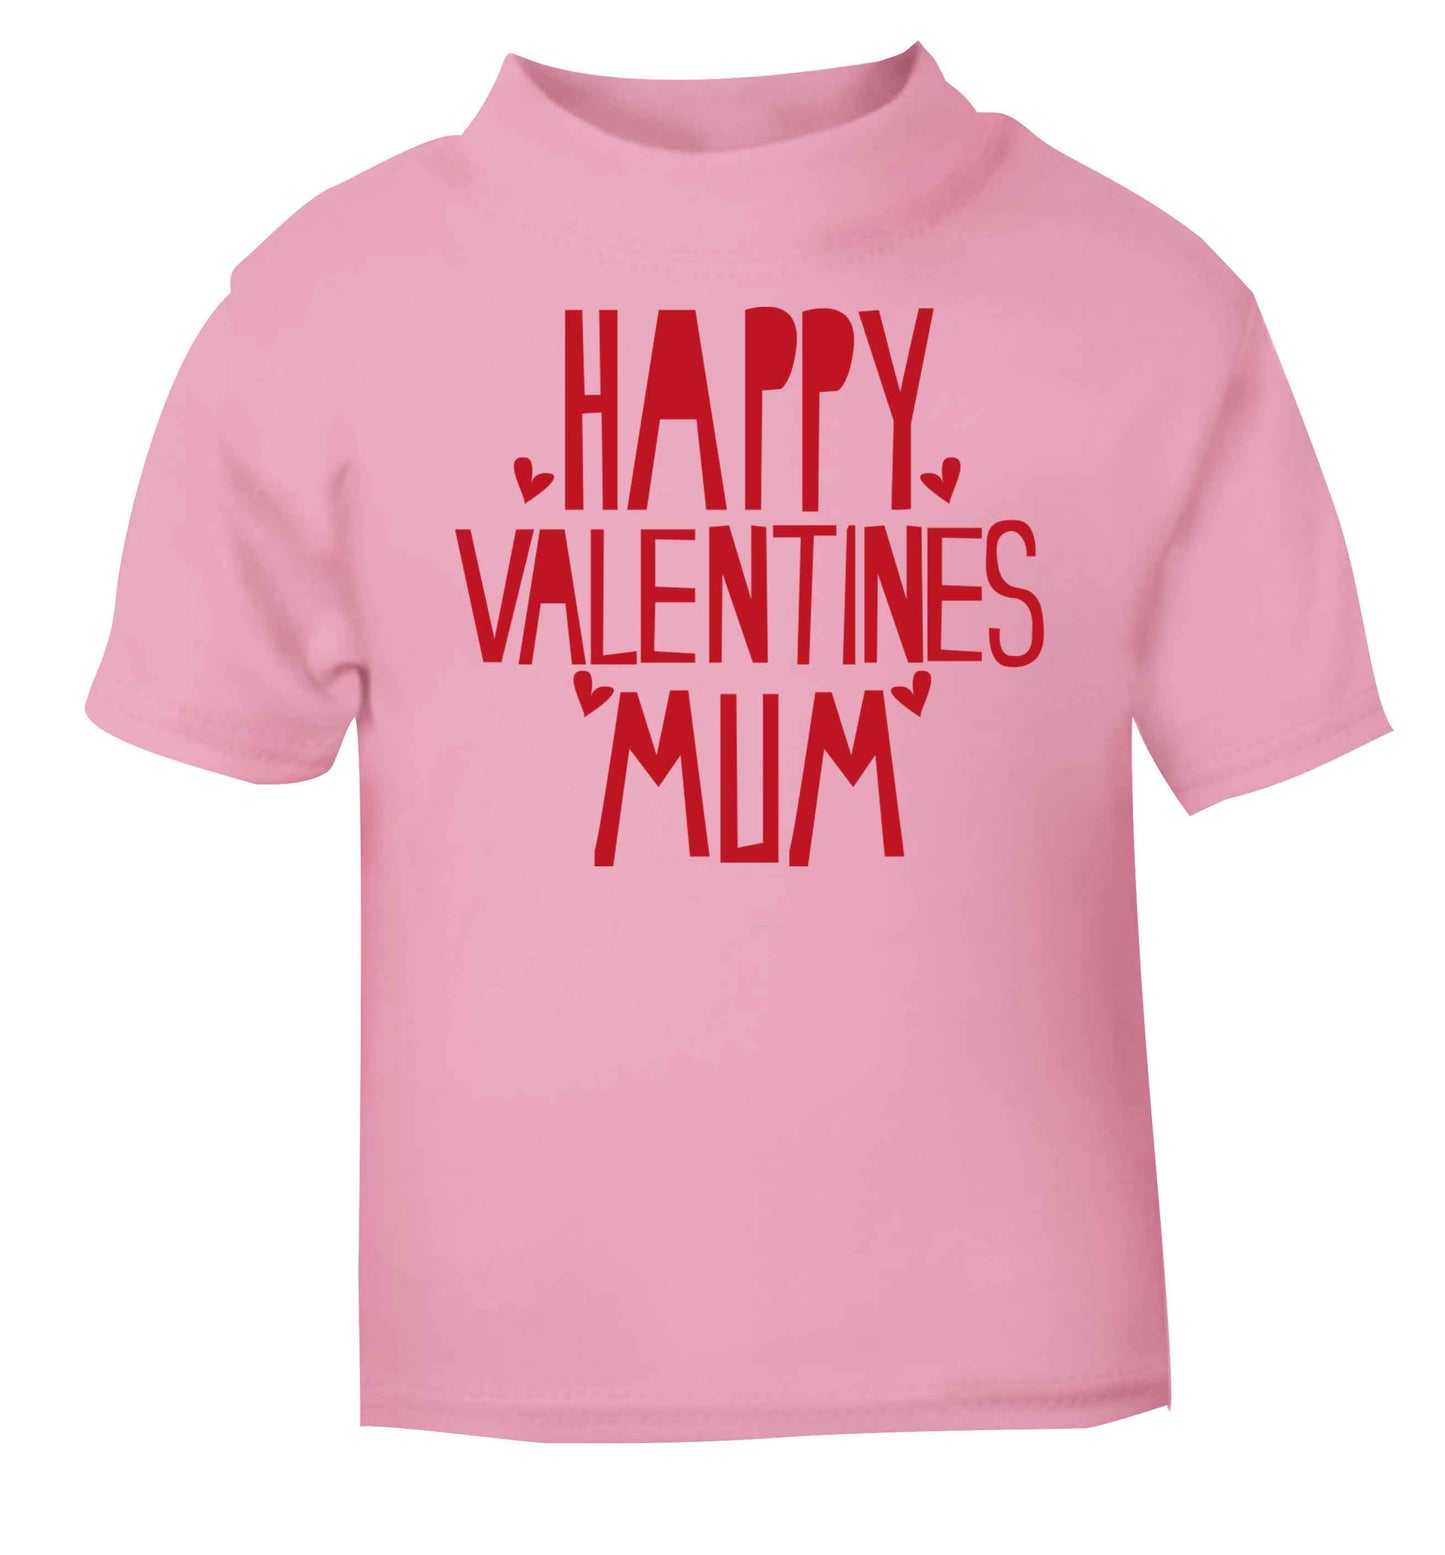 Happy valentines mum light pink baby toddler Tshirt 2 Years